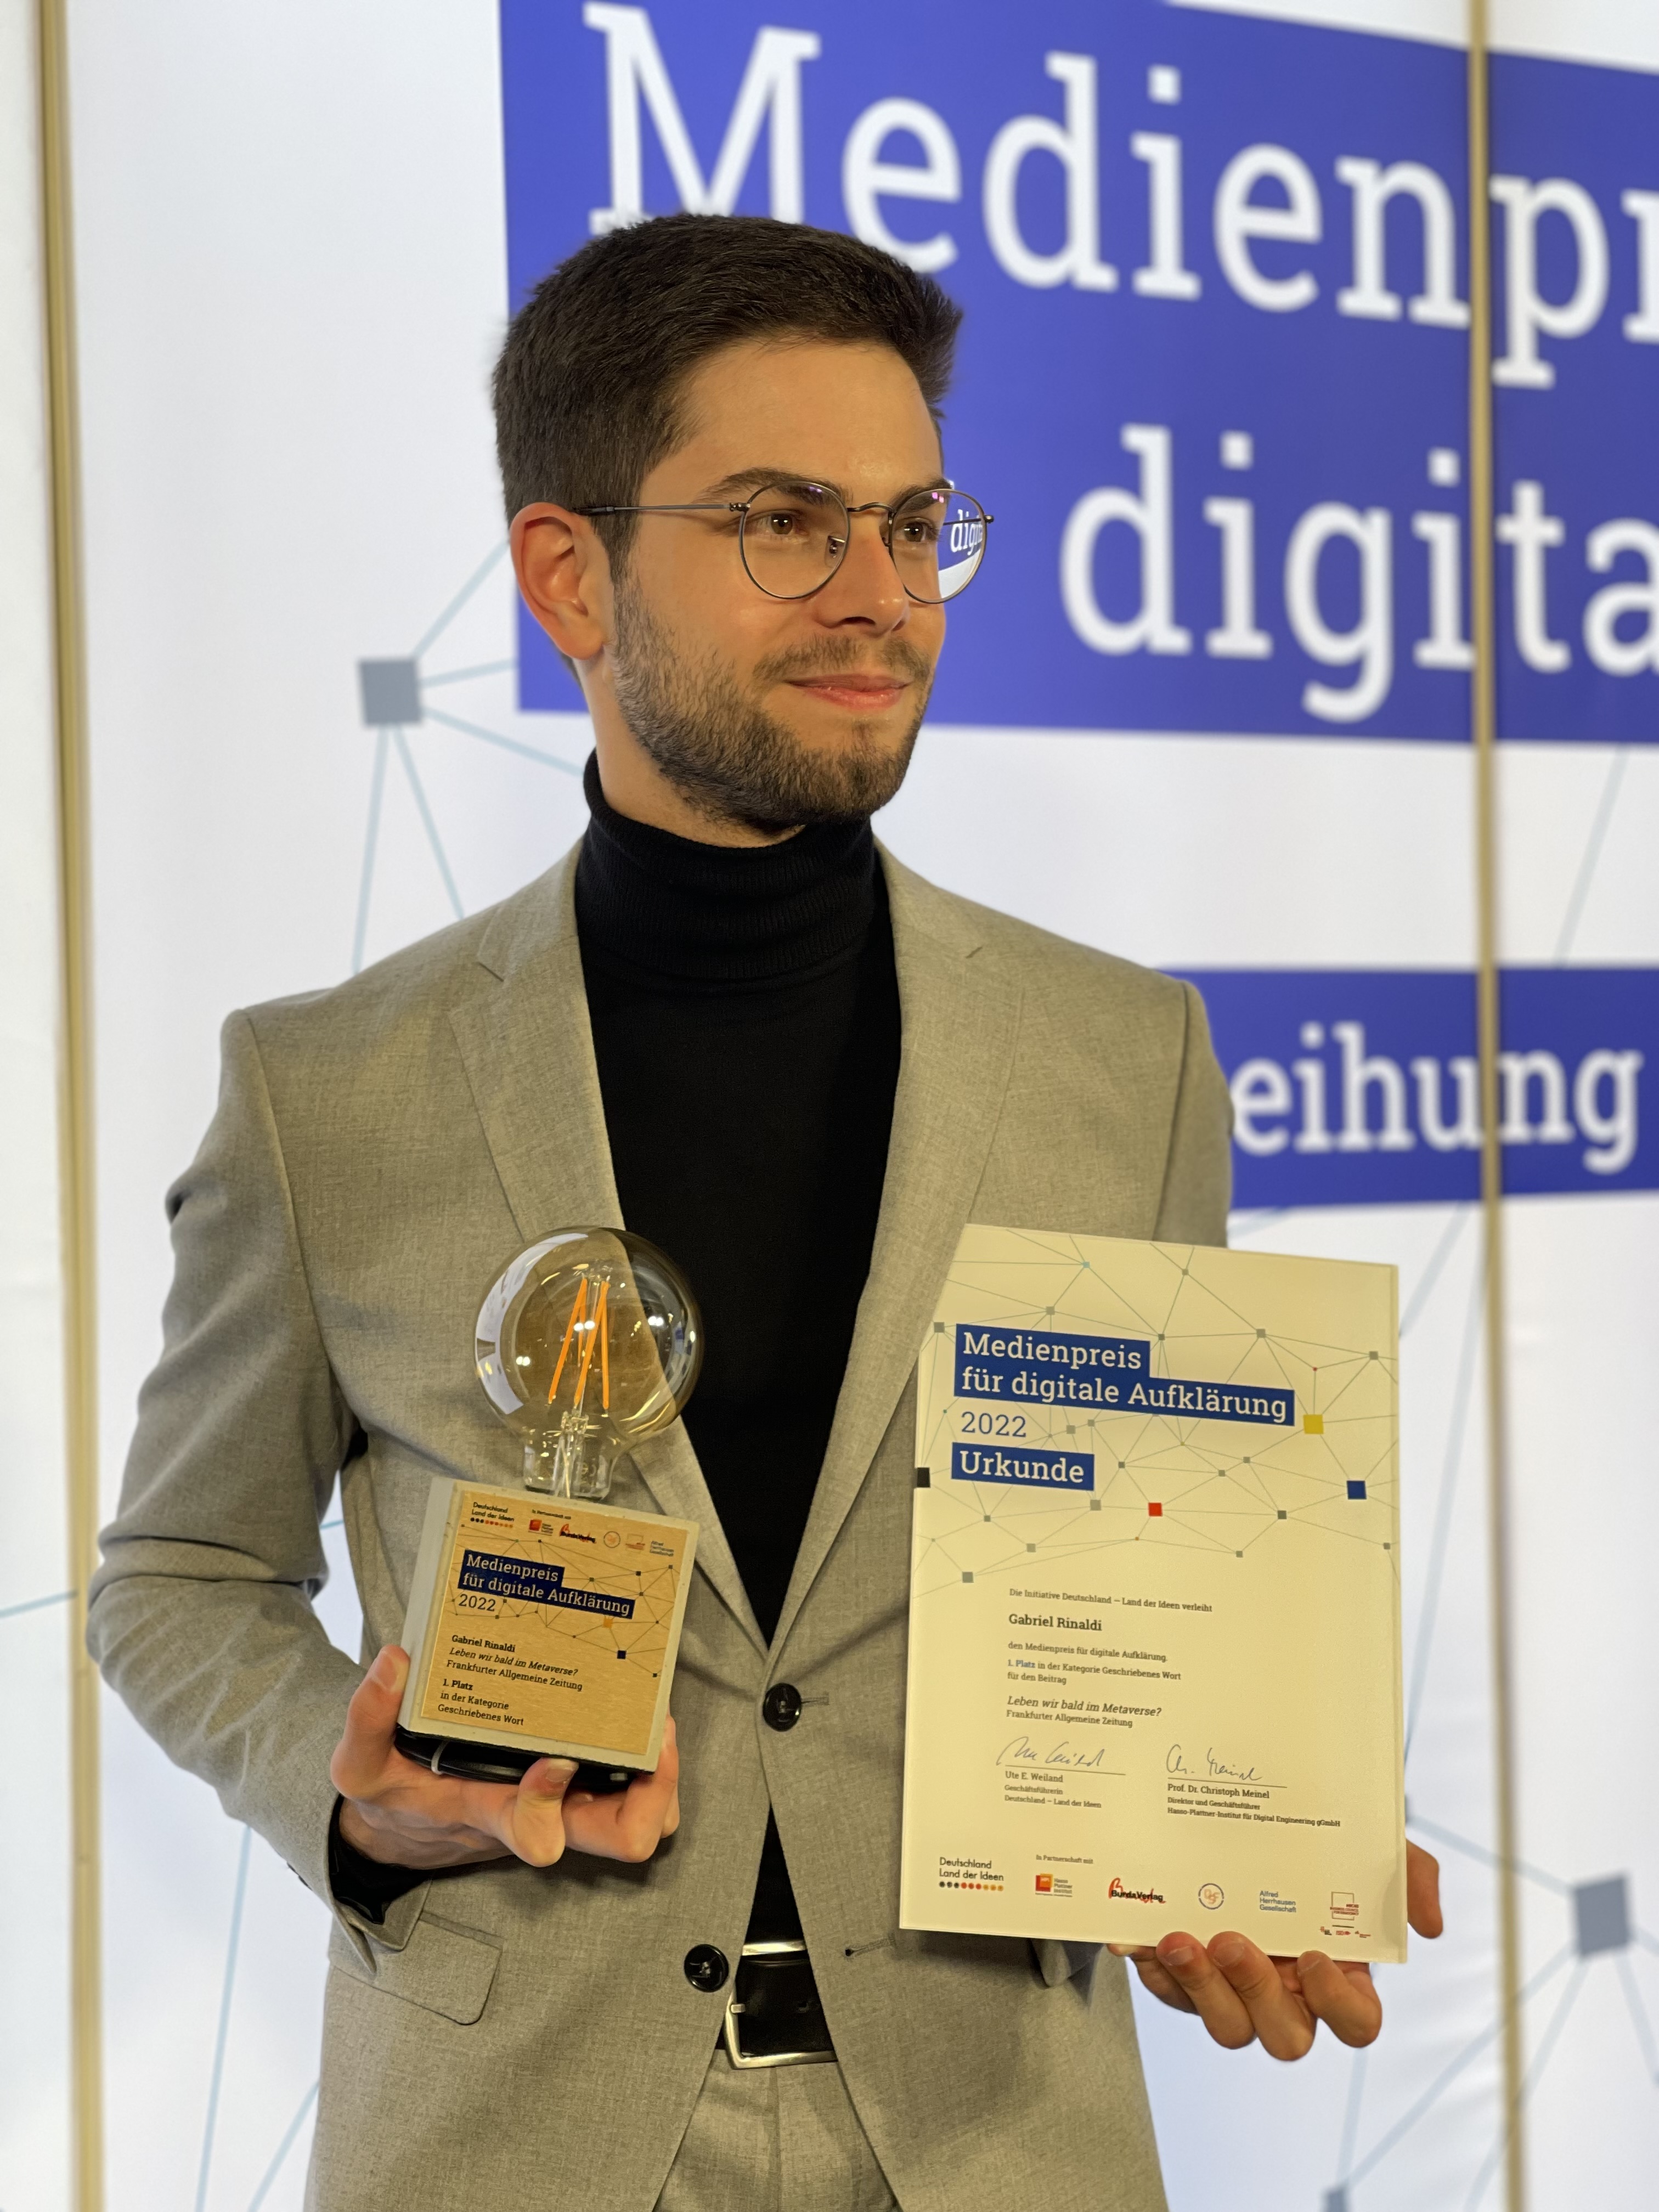 Gabriel Rinaldi received the Media Award for Digital Enlightenment 2022 for his article on the metaverse published in the Frankfurter Allgemeine Zeitung, photographed by Larena Klöckner